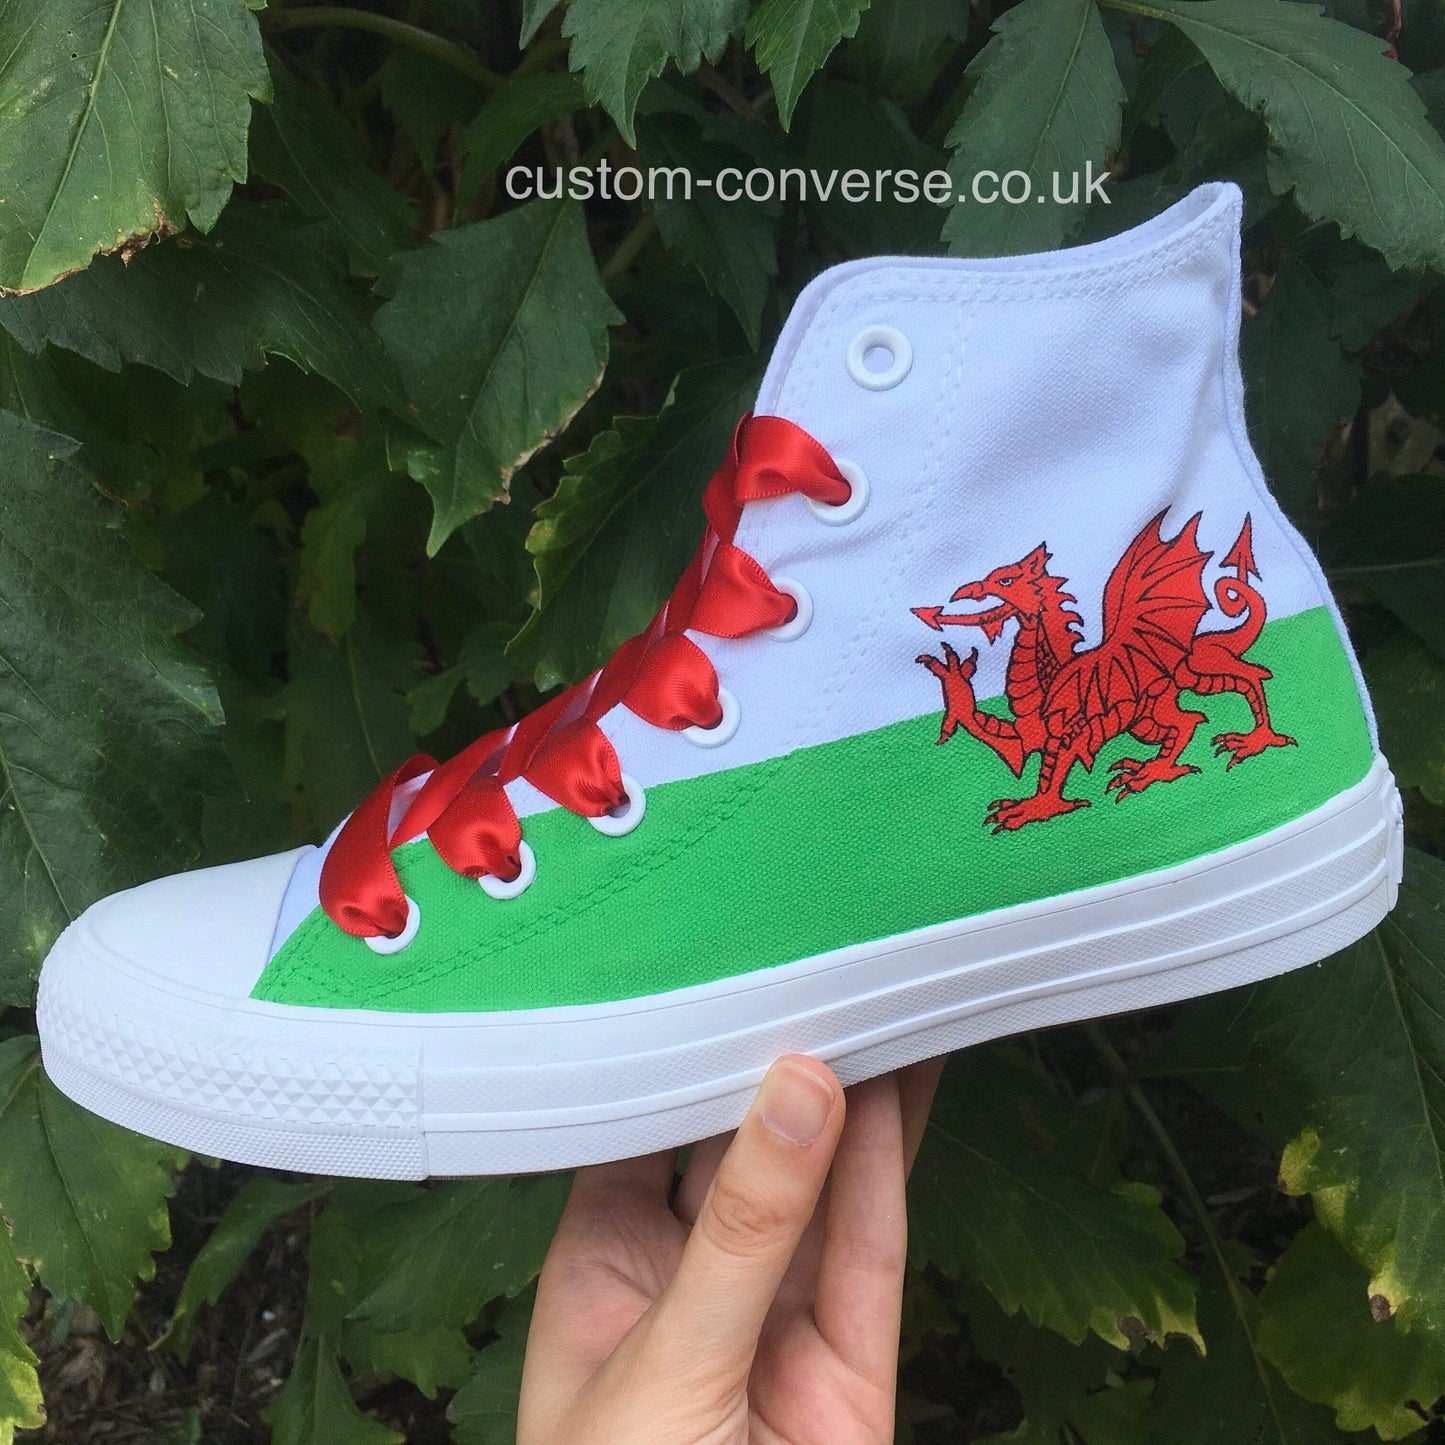 Welsh Flag - Custom Converse Ltd.